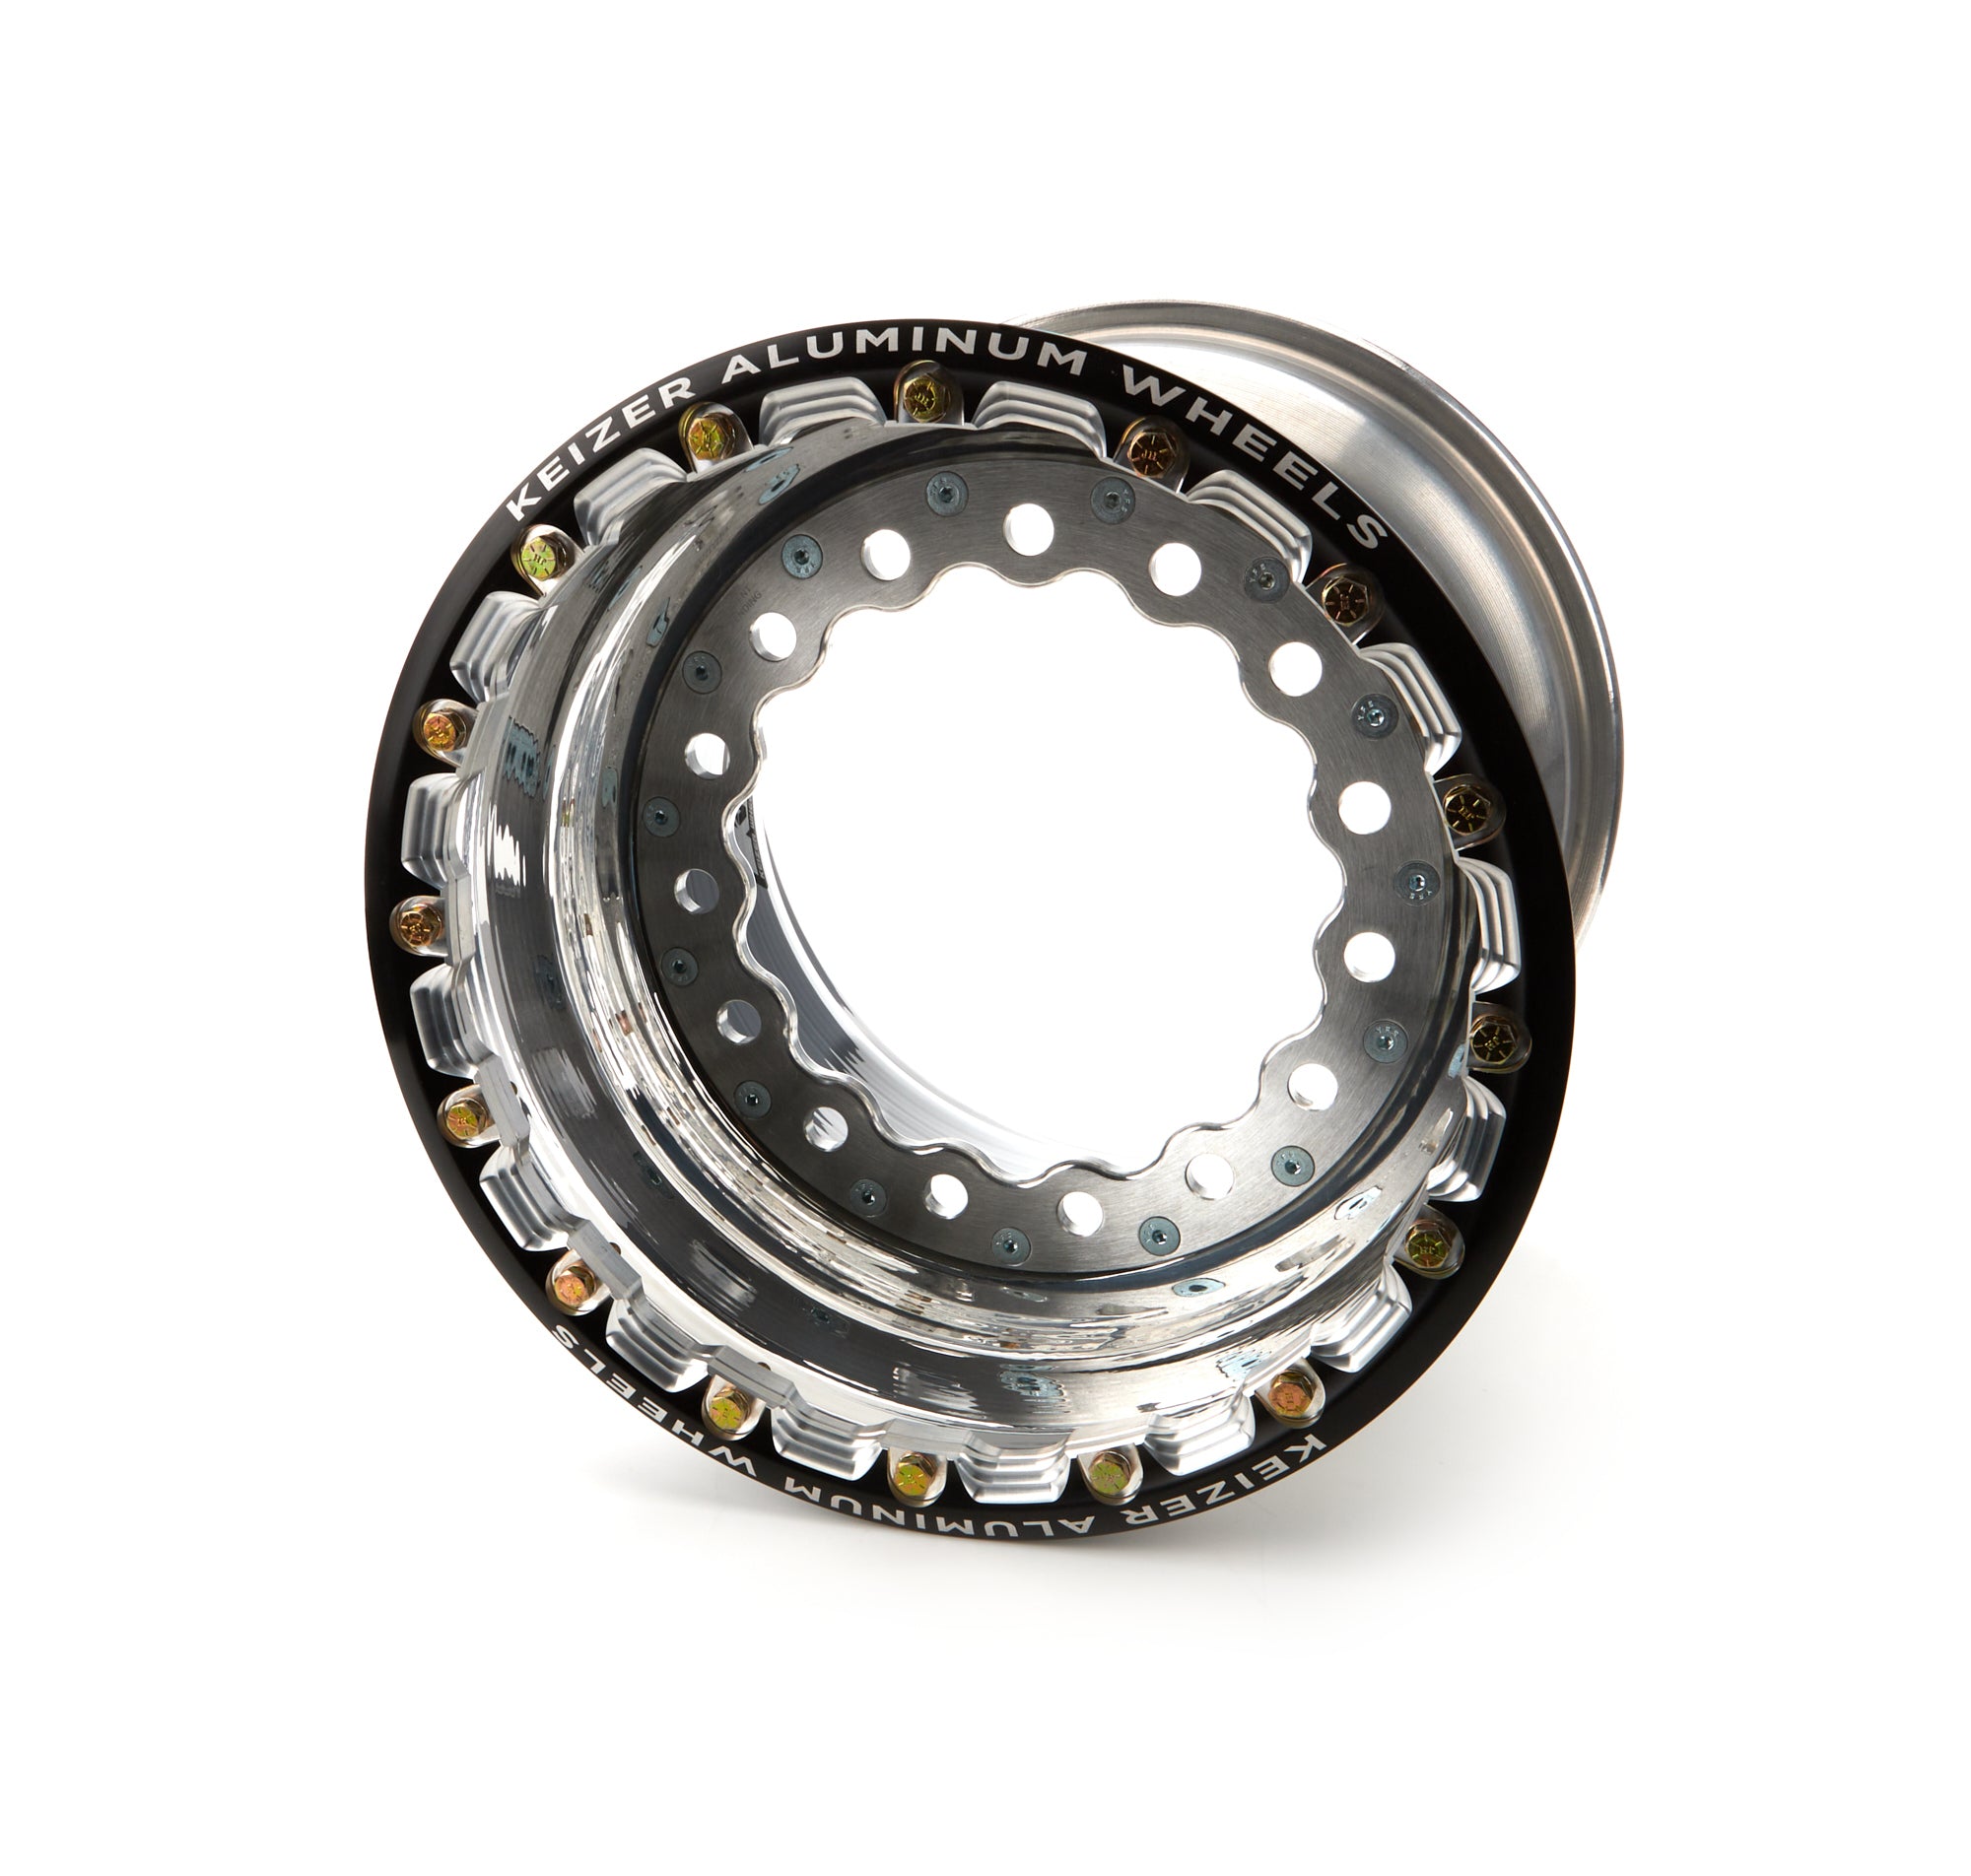 Keizer Aluminum Wheels, Inc. 15x13x5 Wide 5 Inner B/L Modular Wheels Wheels main image